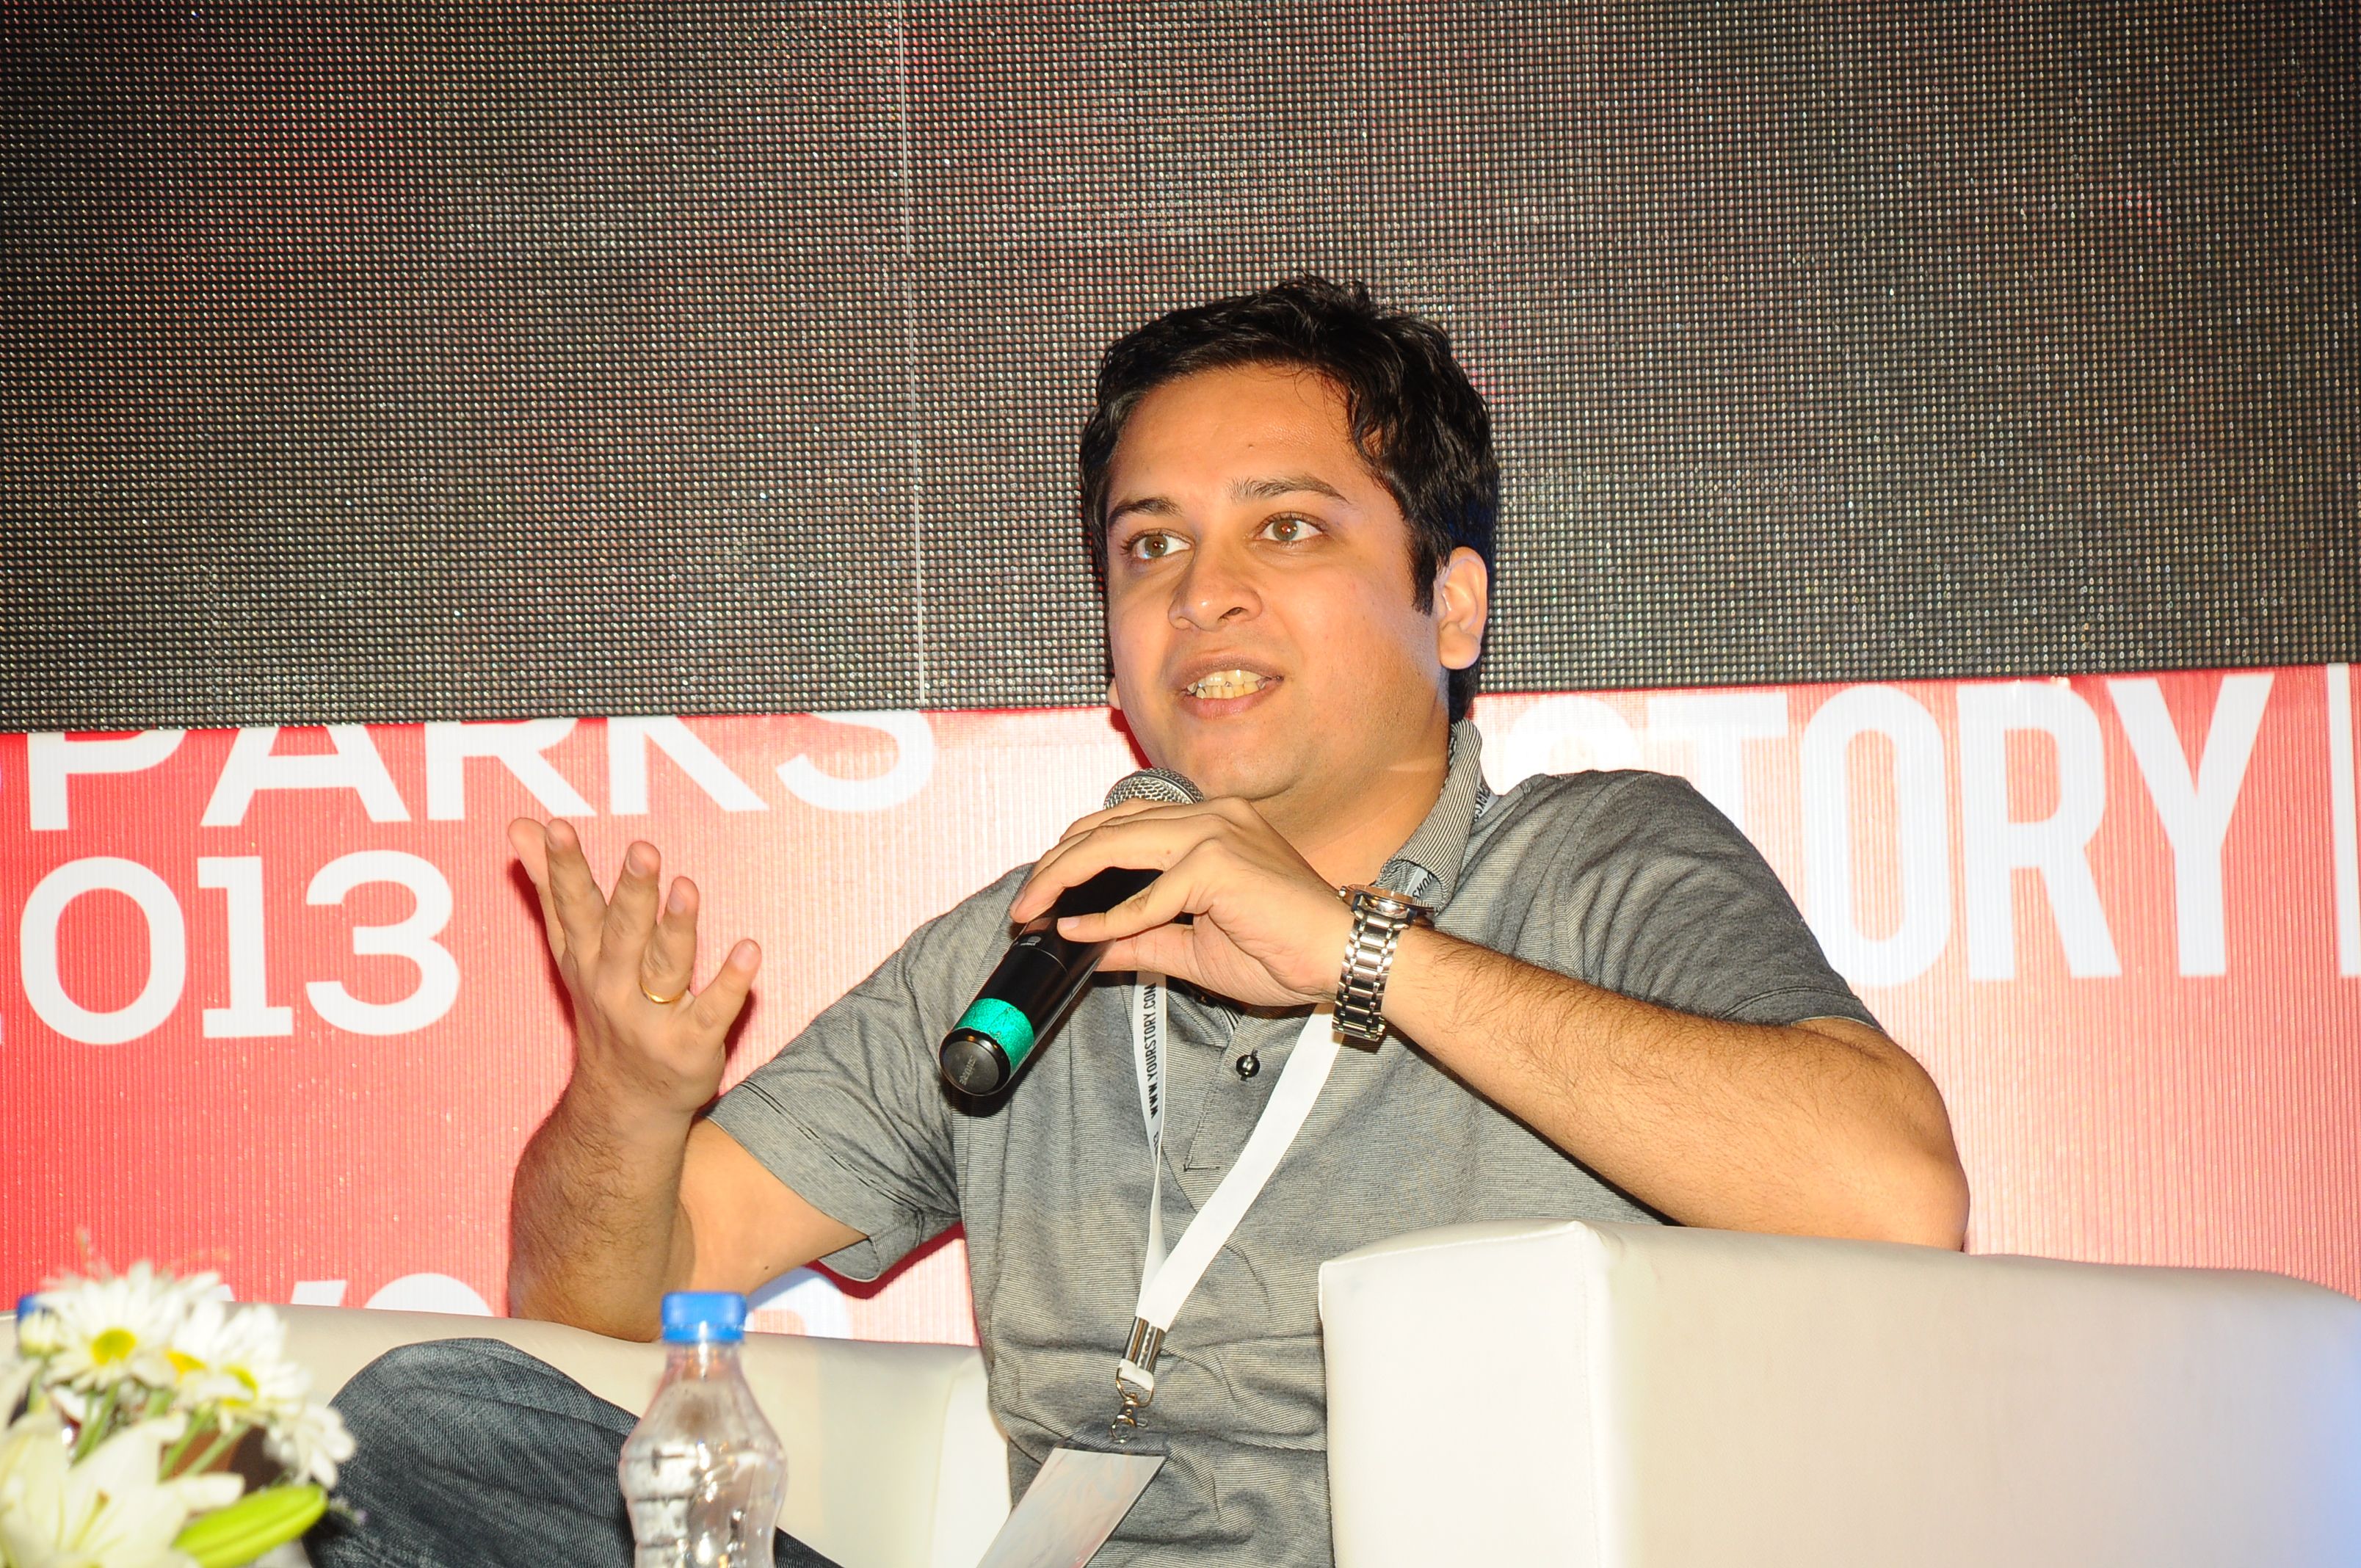 Binny Bansal, co-founder of Flipkart in conversation with Shradha Sharma at TechSparks 2013